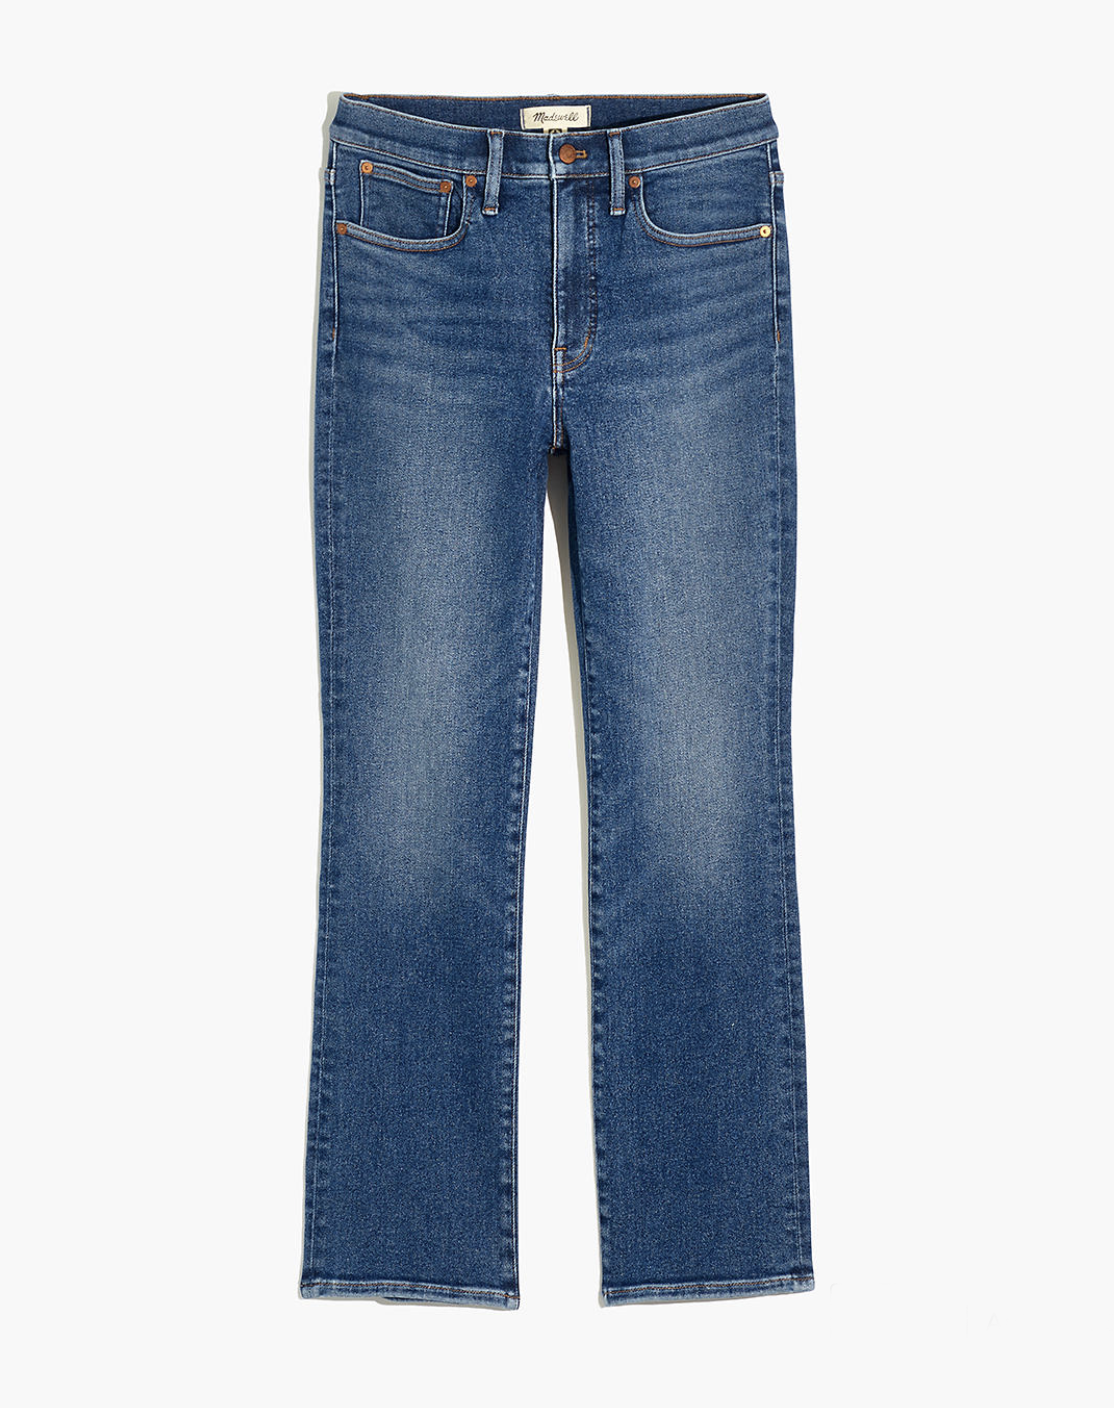 Madewell Cali Jeans